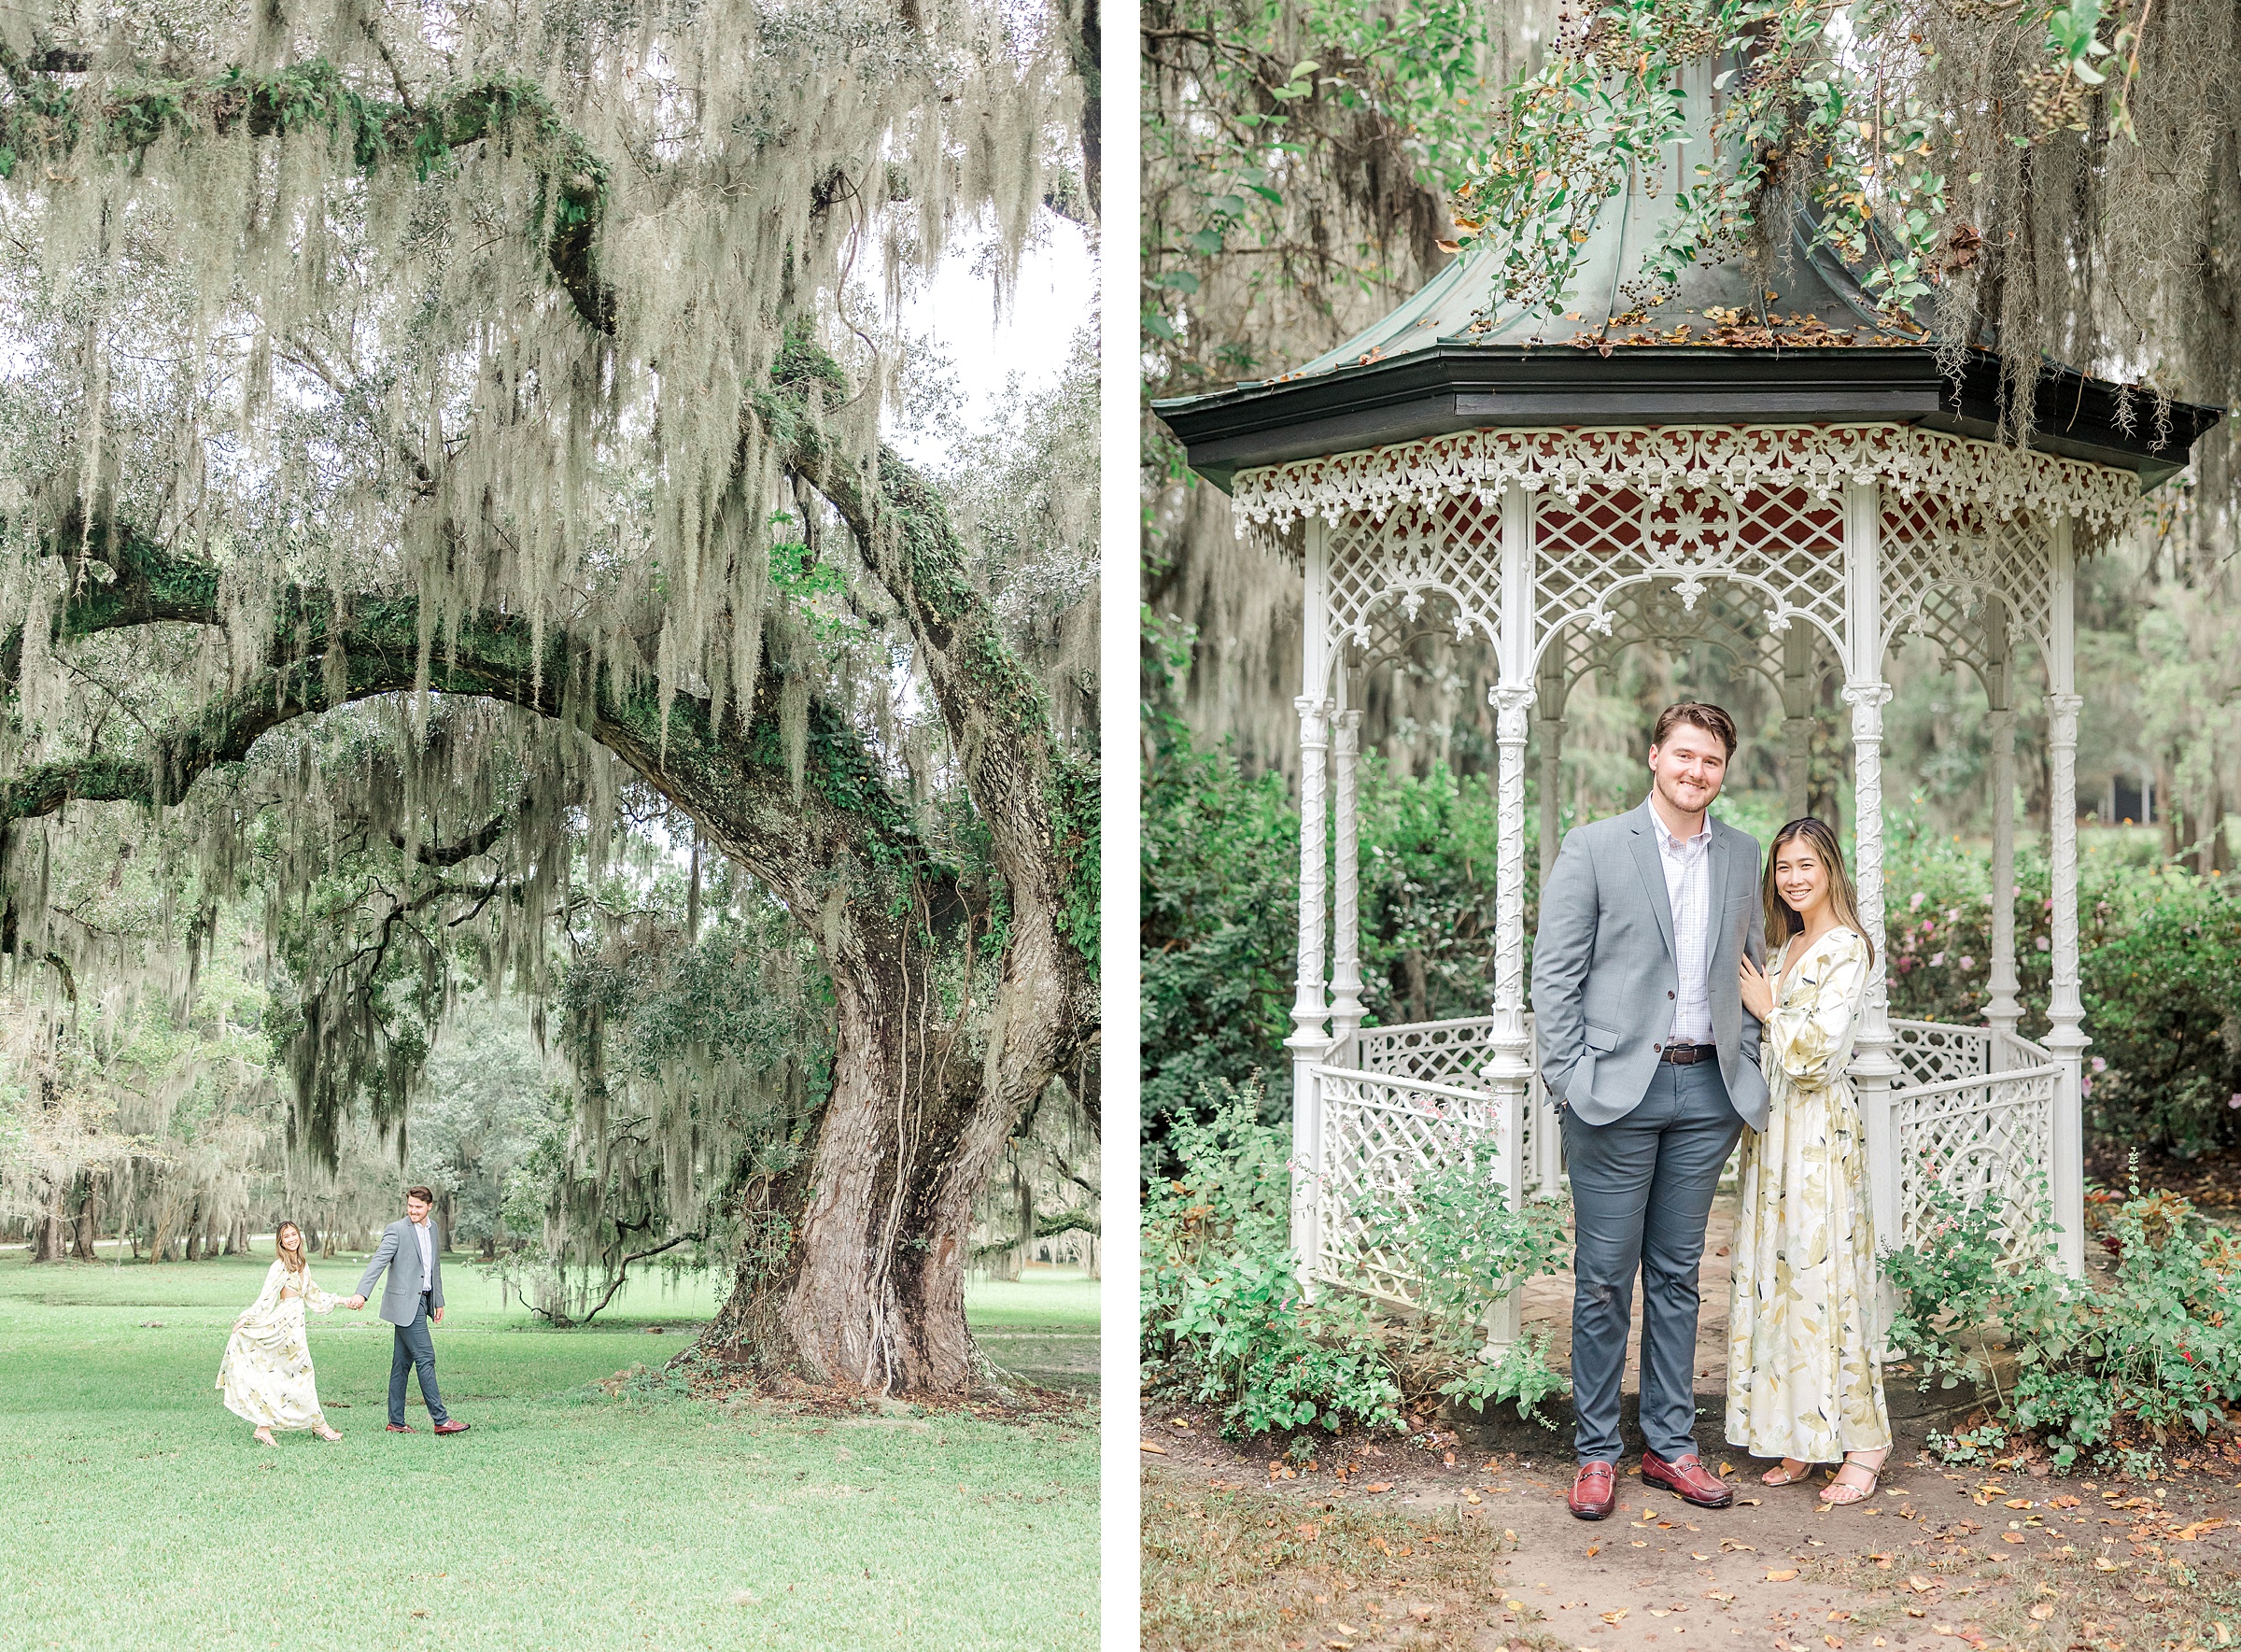 Couple walks under oak trees at Magnolia Plantation and Gardens